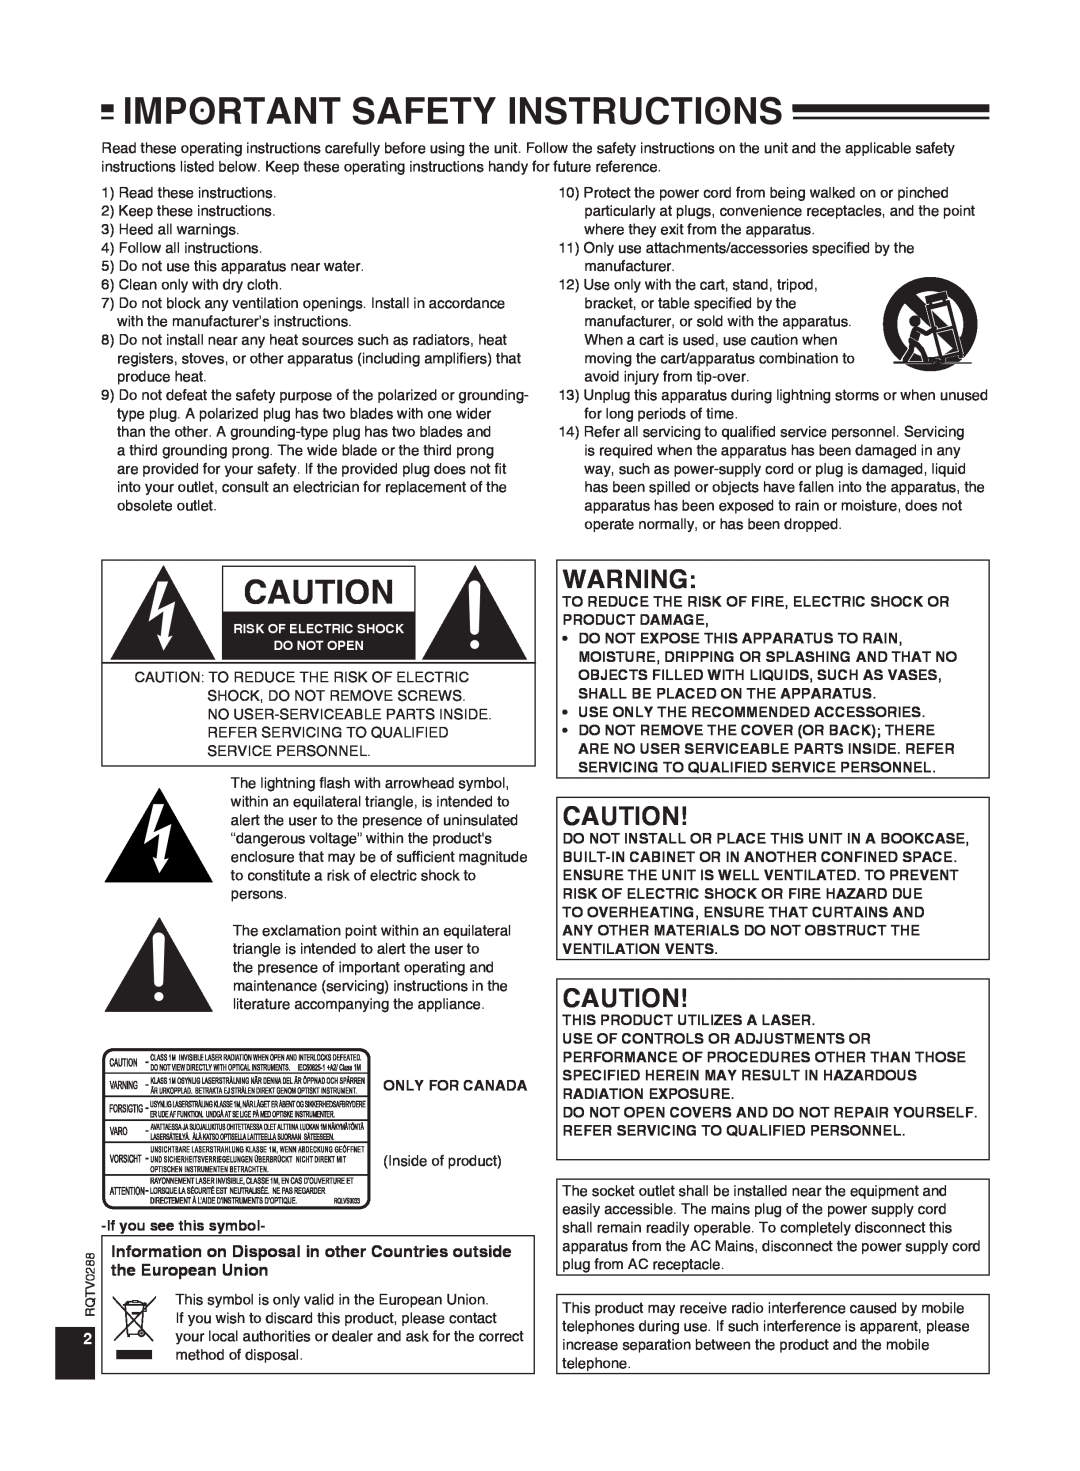 Panasonic SCEN38 important safety instructions Important Safety Instructions, the European Union 